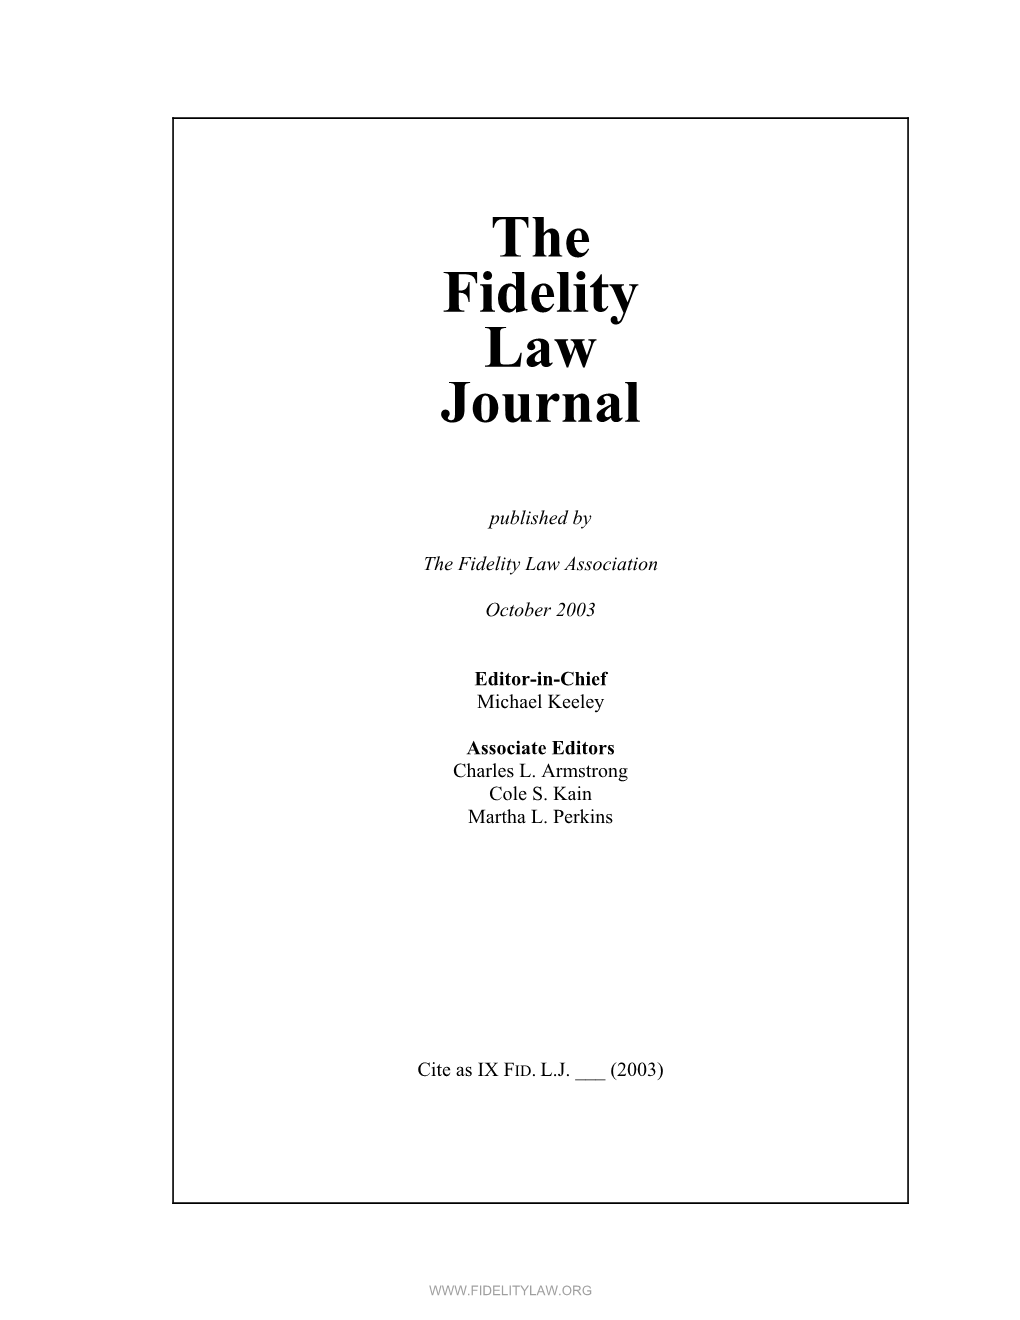 The Fidelity Law Journal